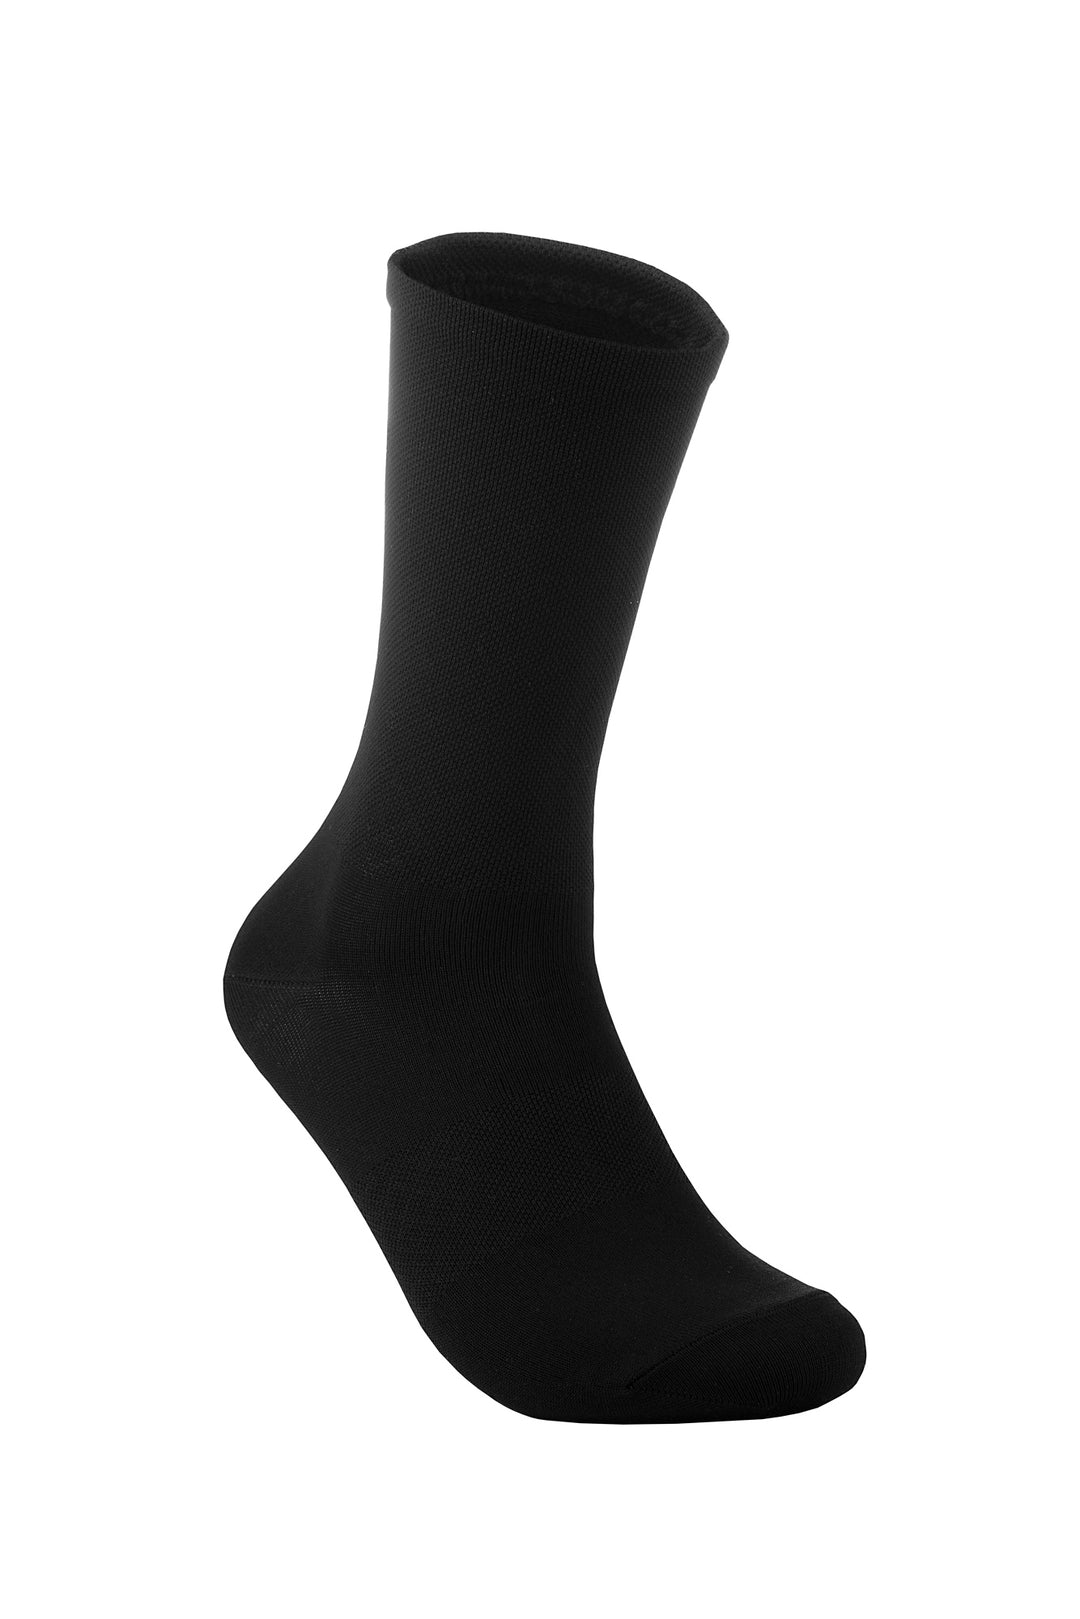 KindHuman Socks - Black